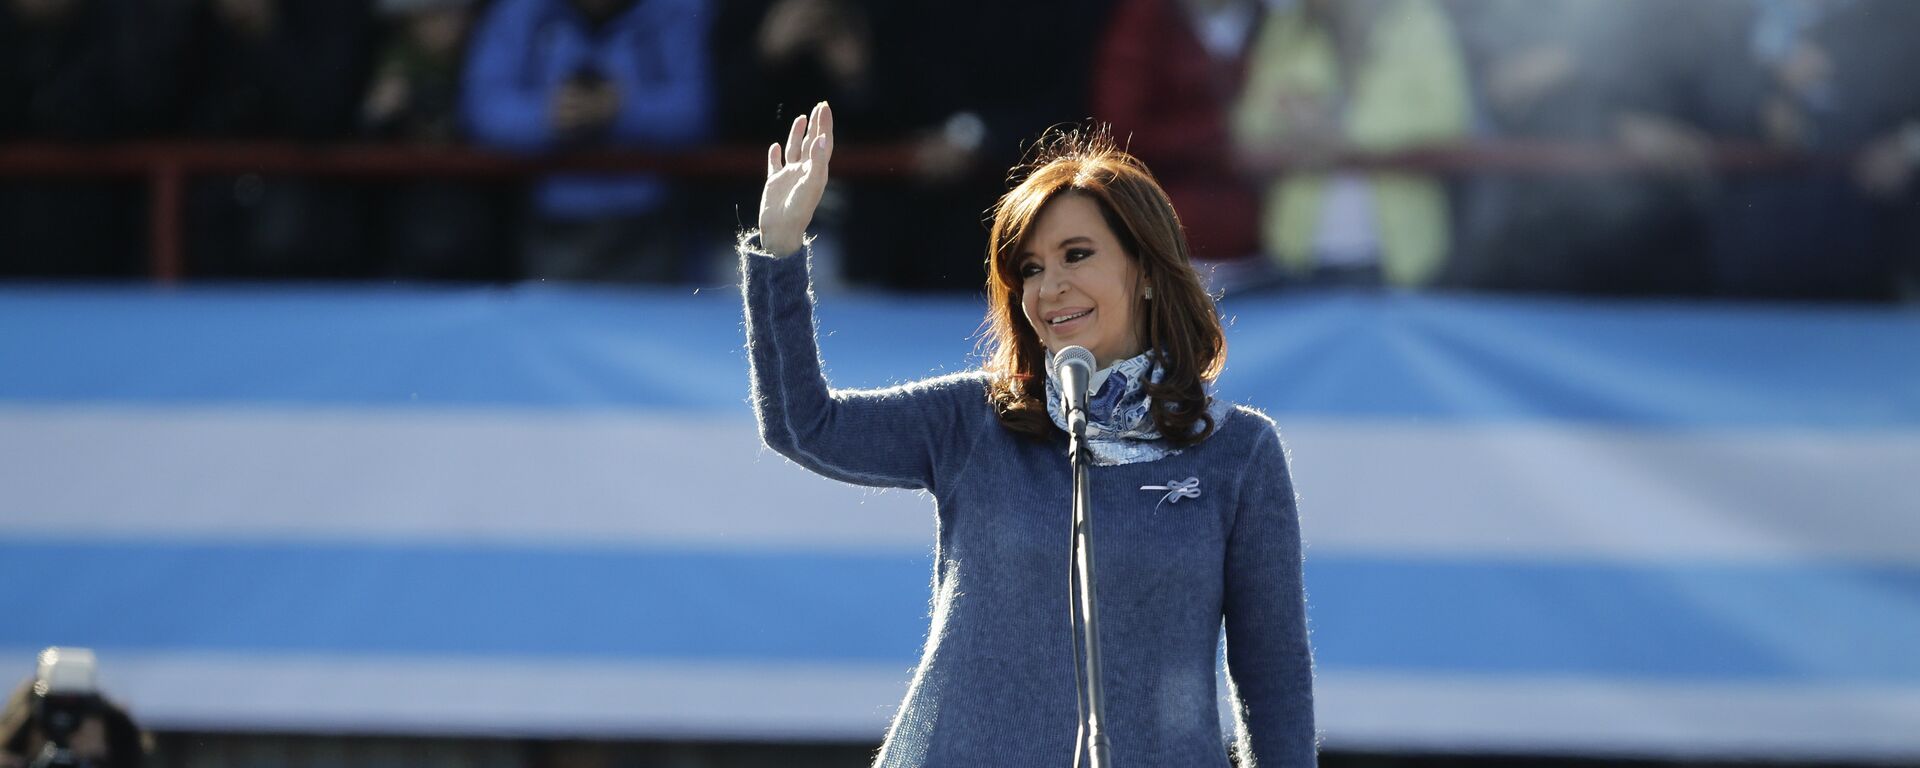 Cristina Fernández de Kirchner, expresidenta de Argentina - Sputnik Mundo, 1920, 04.11.2021